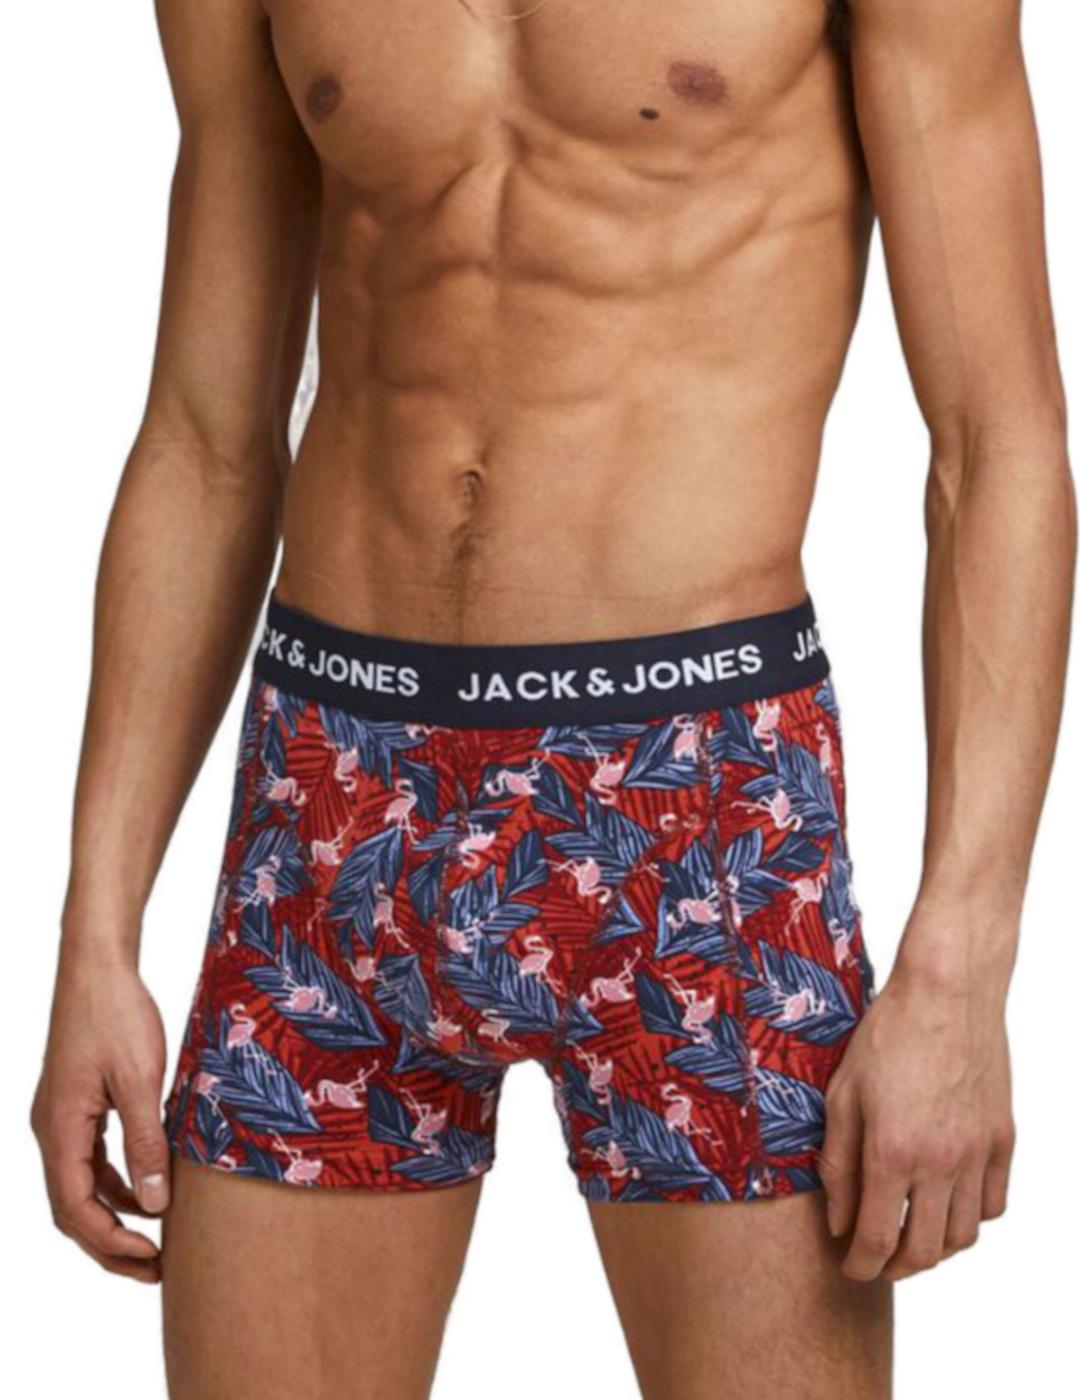 Intimo Jack&Jones Jacred pack3 floreados hombre -z